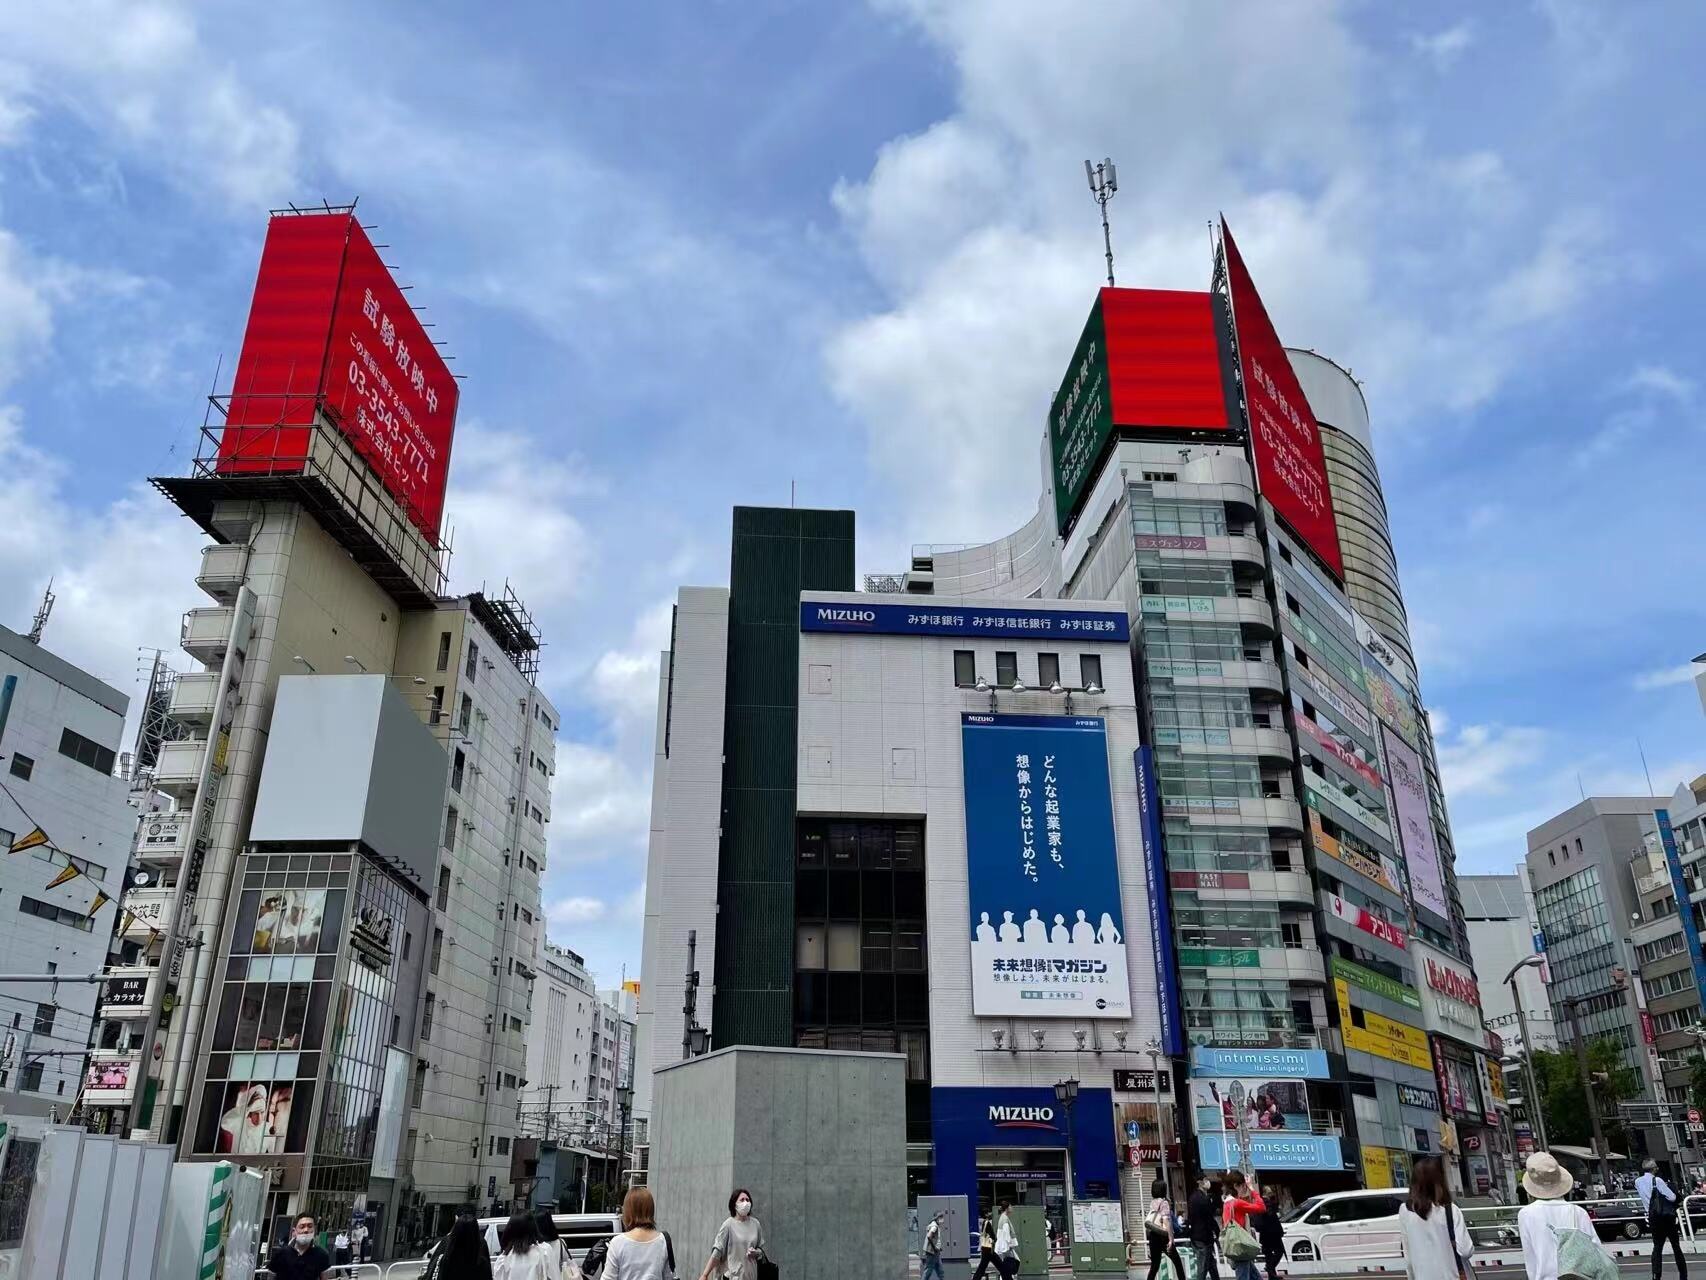 Japan Shibuya Plaza naked-eye 3D display project